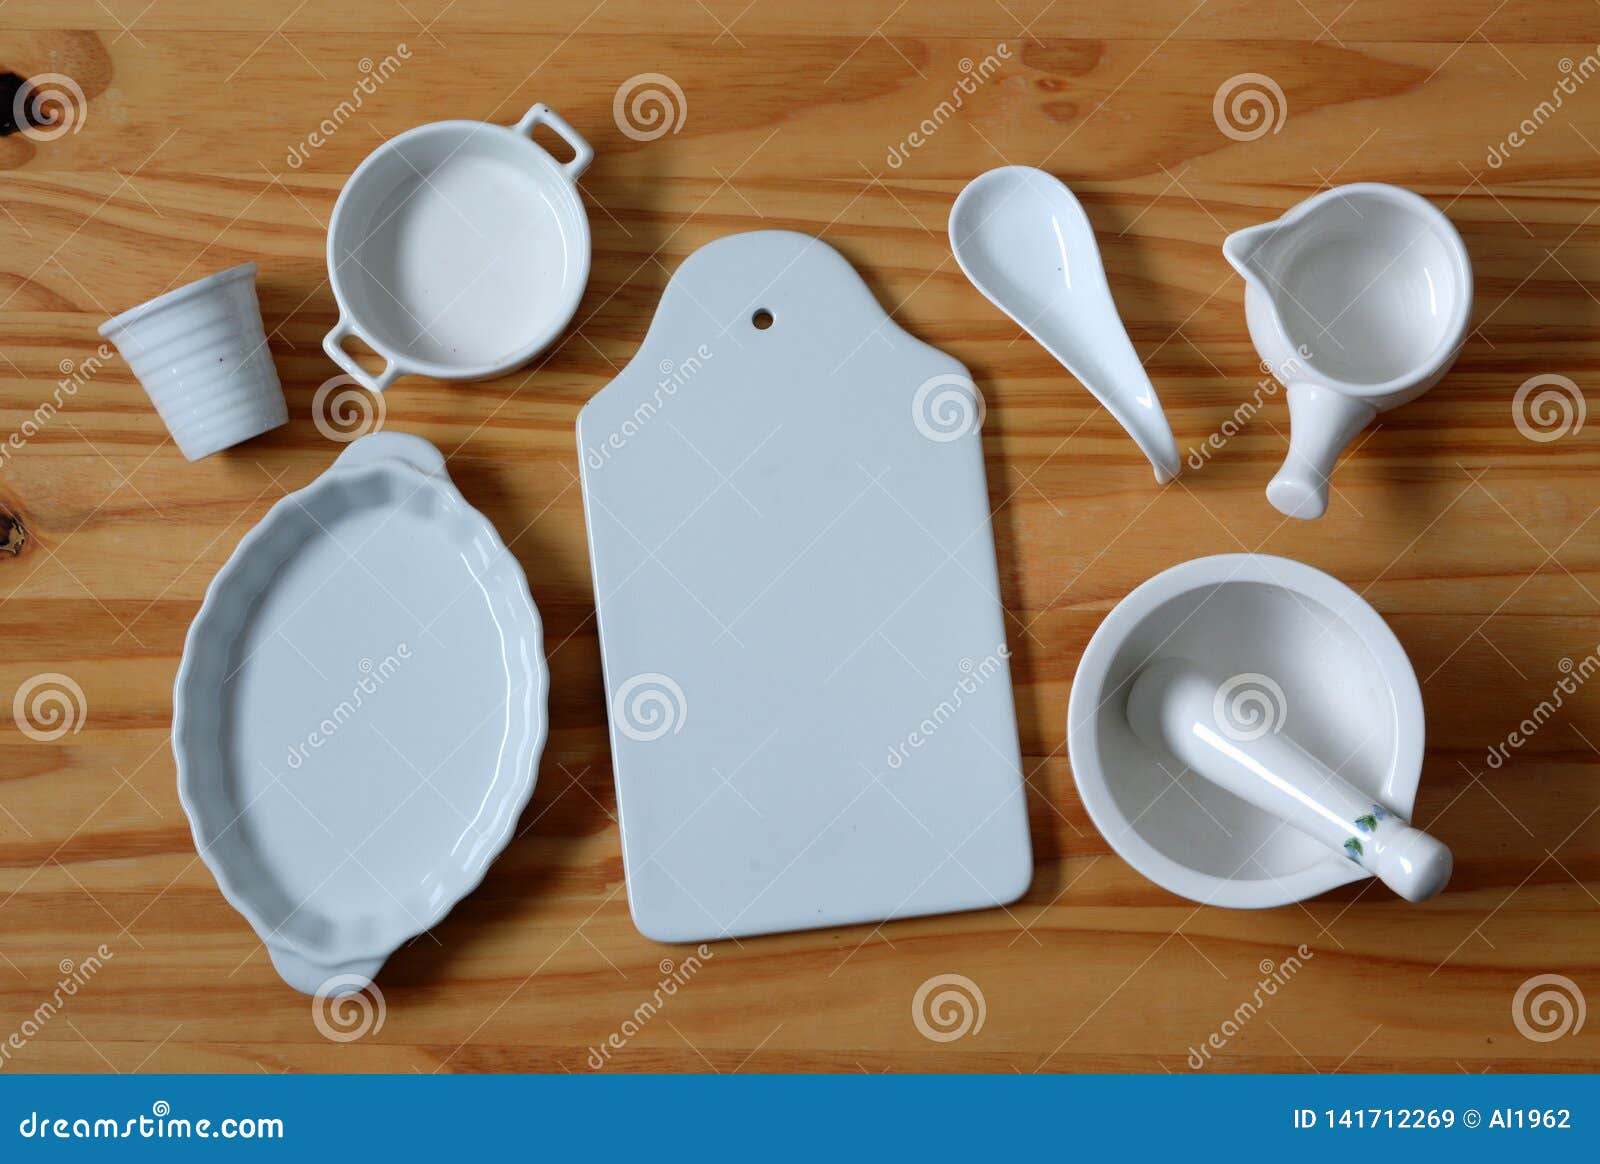 White Ceramic Kitchenware on Wooden Table   Horizontal Stock Image ...